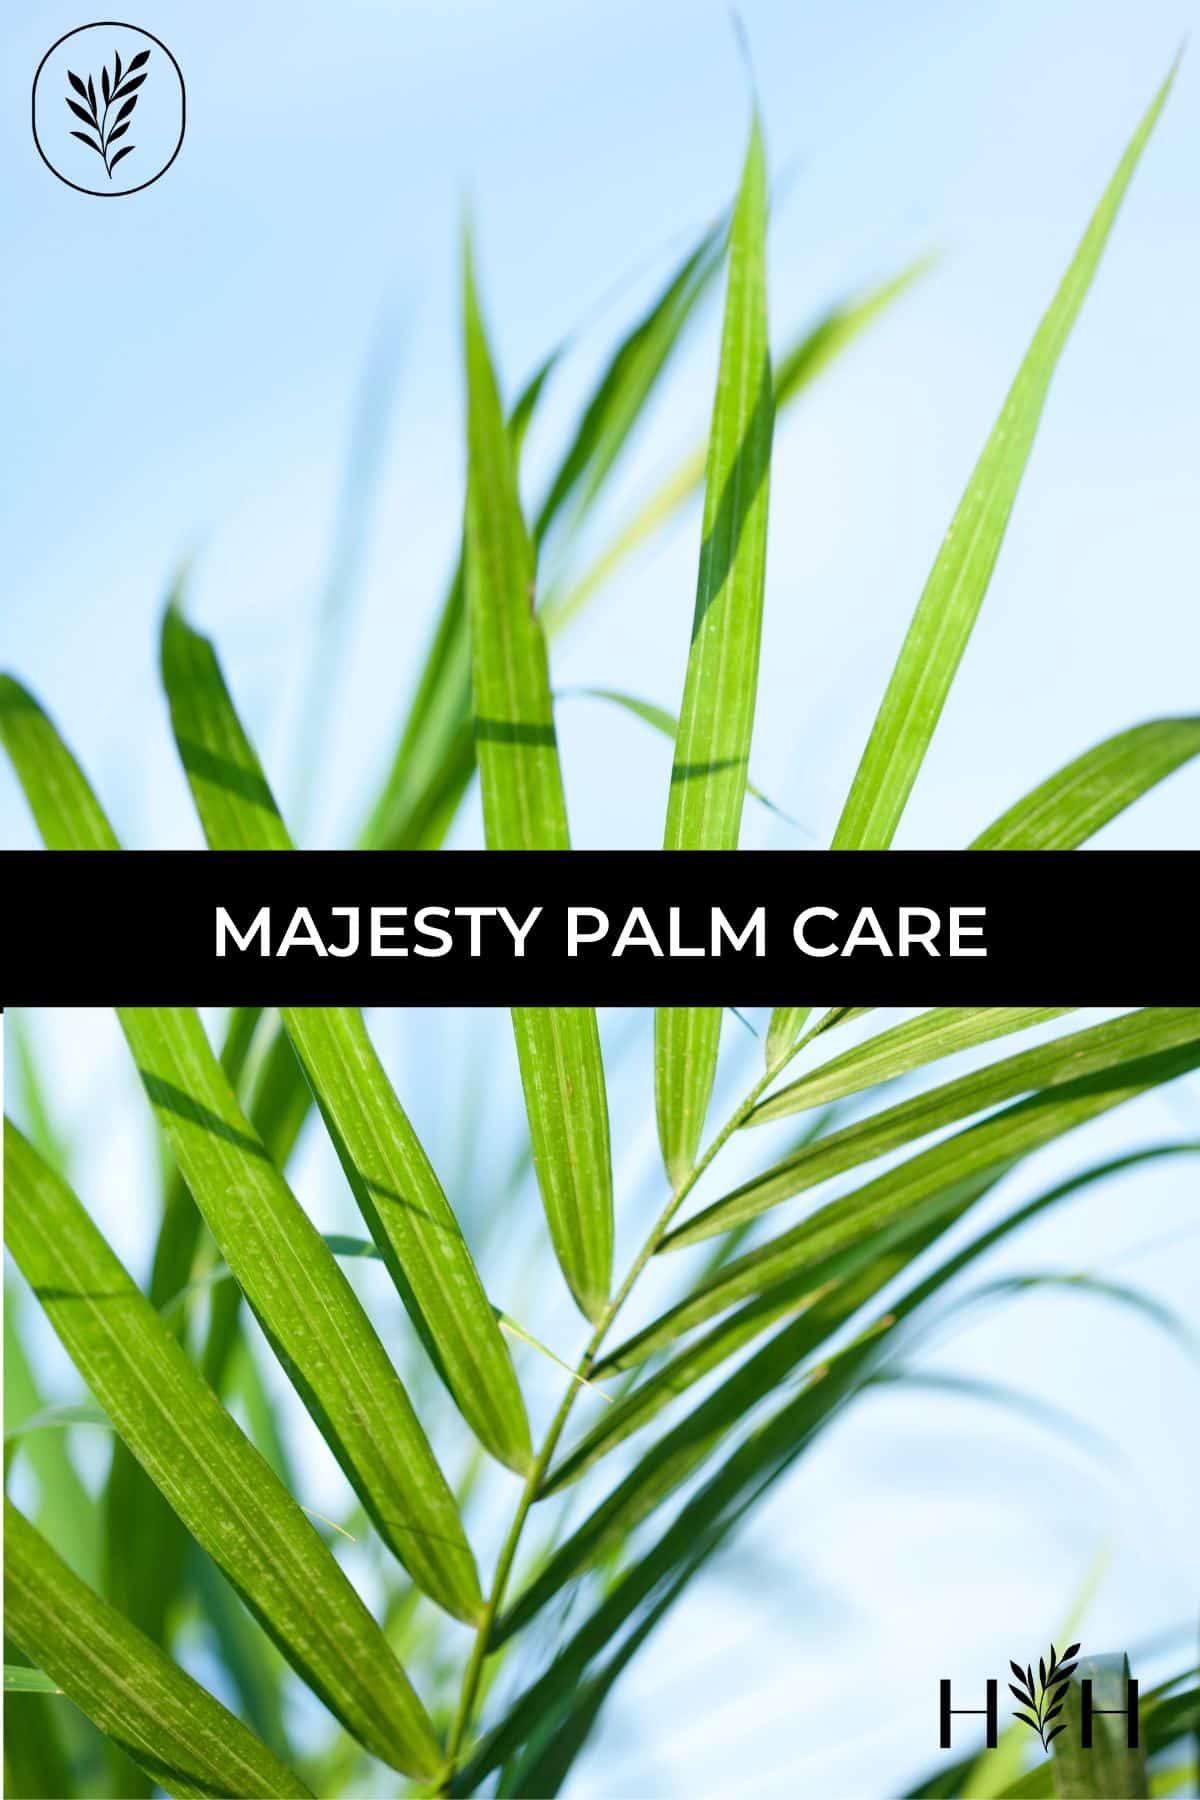 Majesty palm care via @home4theharvest